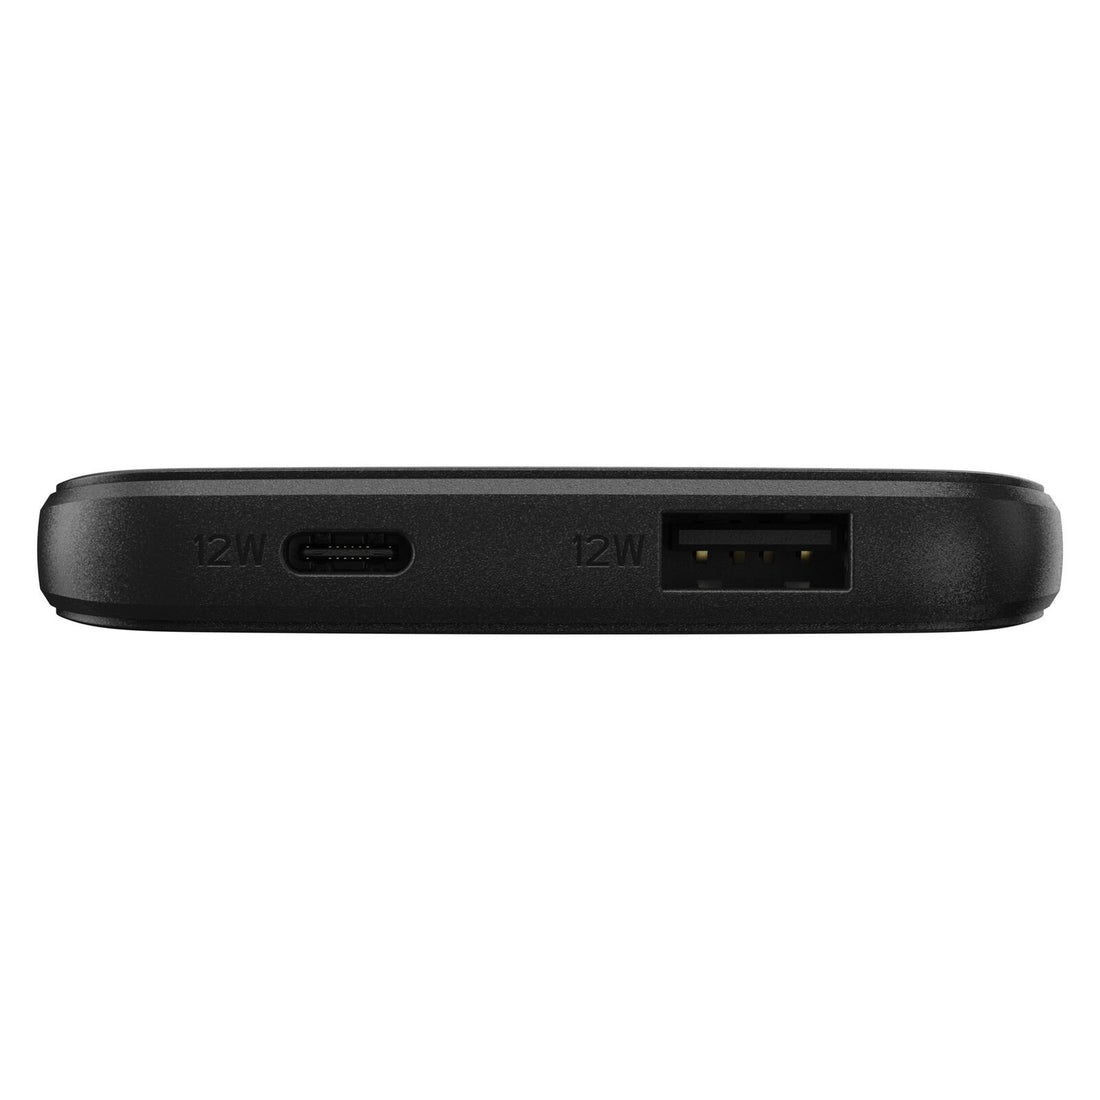 OtterBox 5000mAh Performance Power Bank w/USB-A and USB-C ports - Black (New)